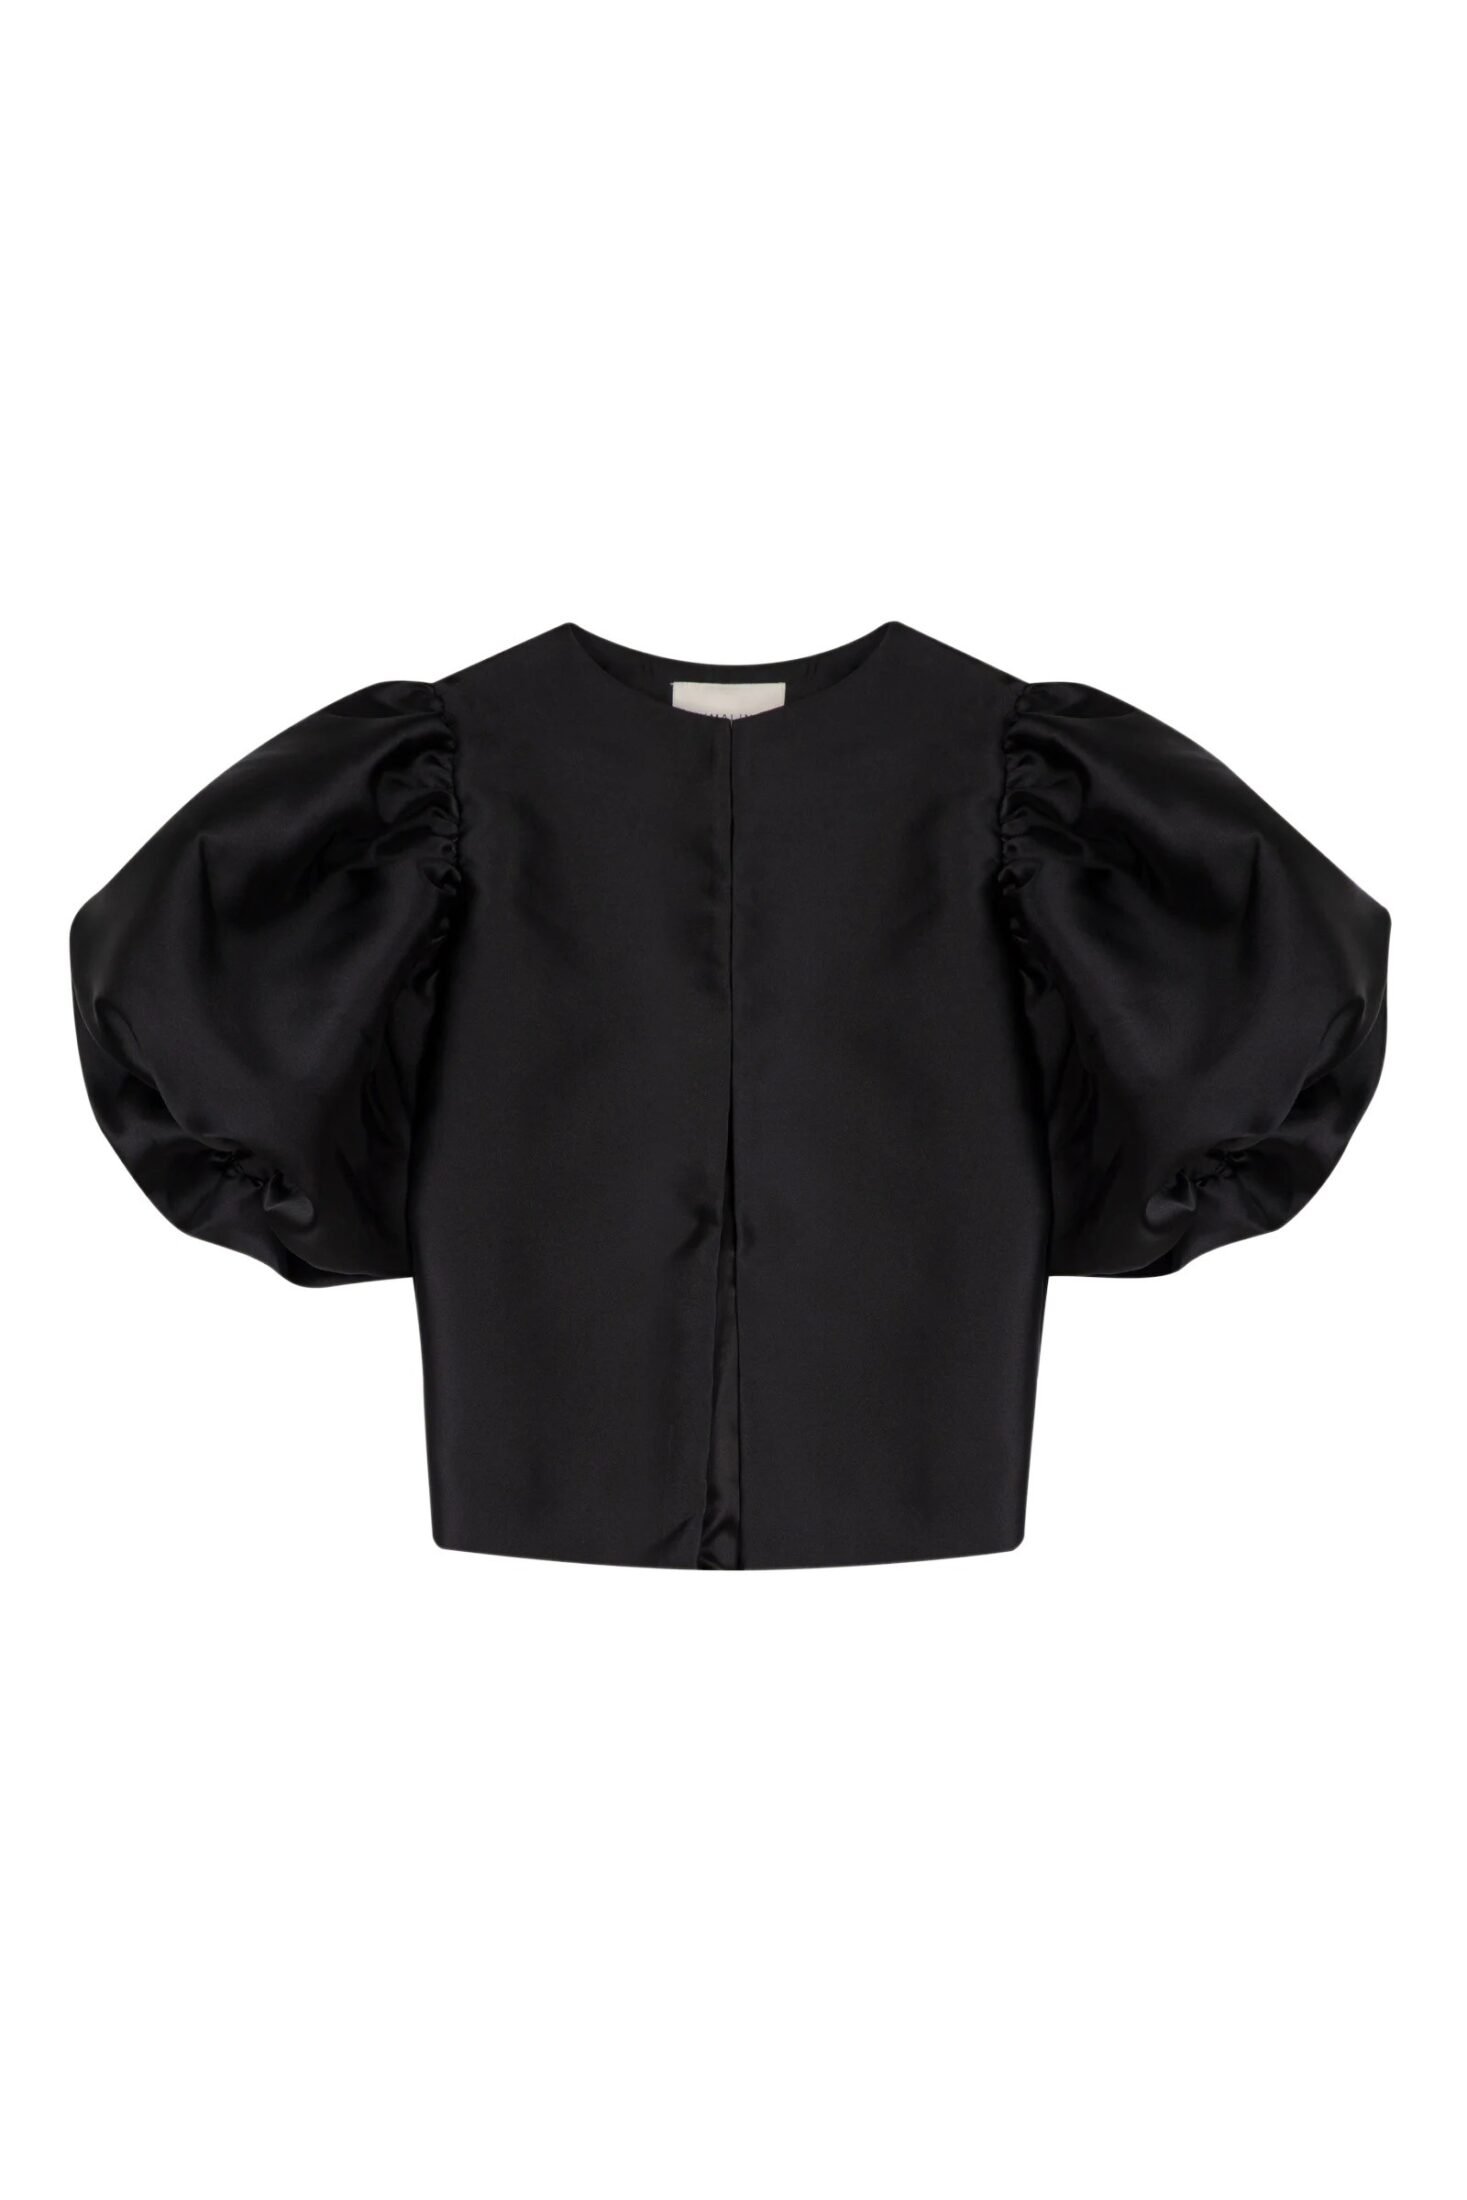 1491_779e00e1b9-cleo-blouse-black-by-malina-1-size1600